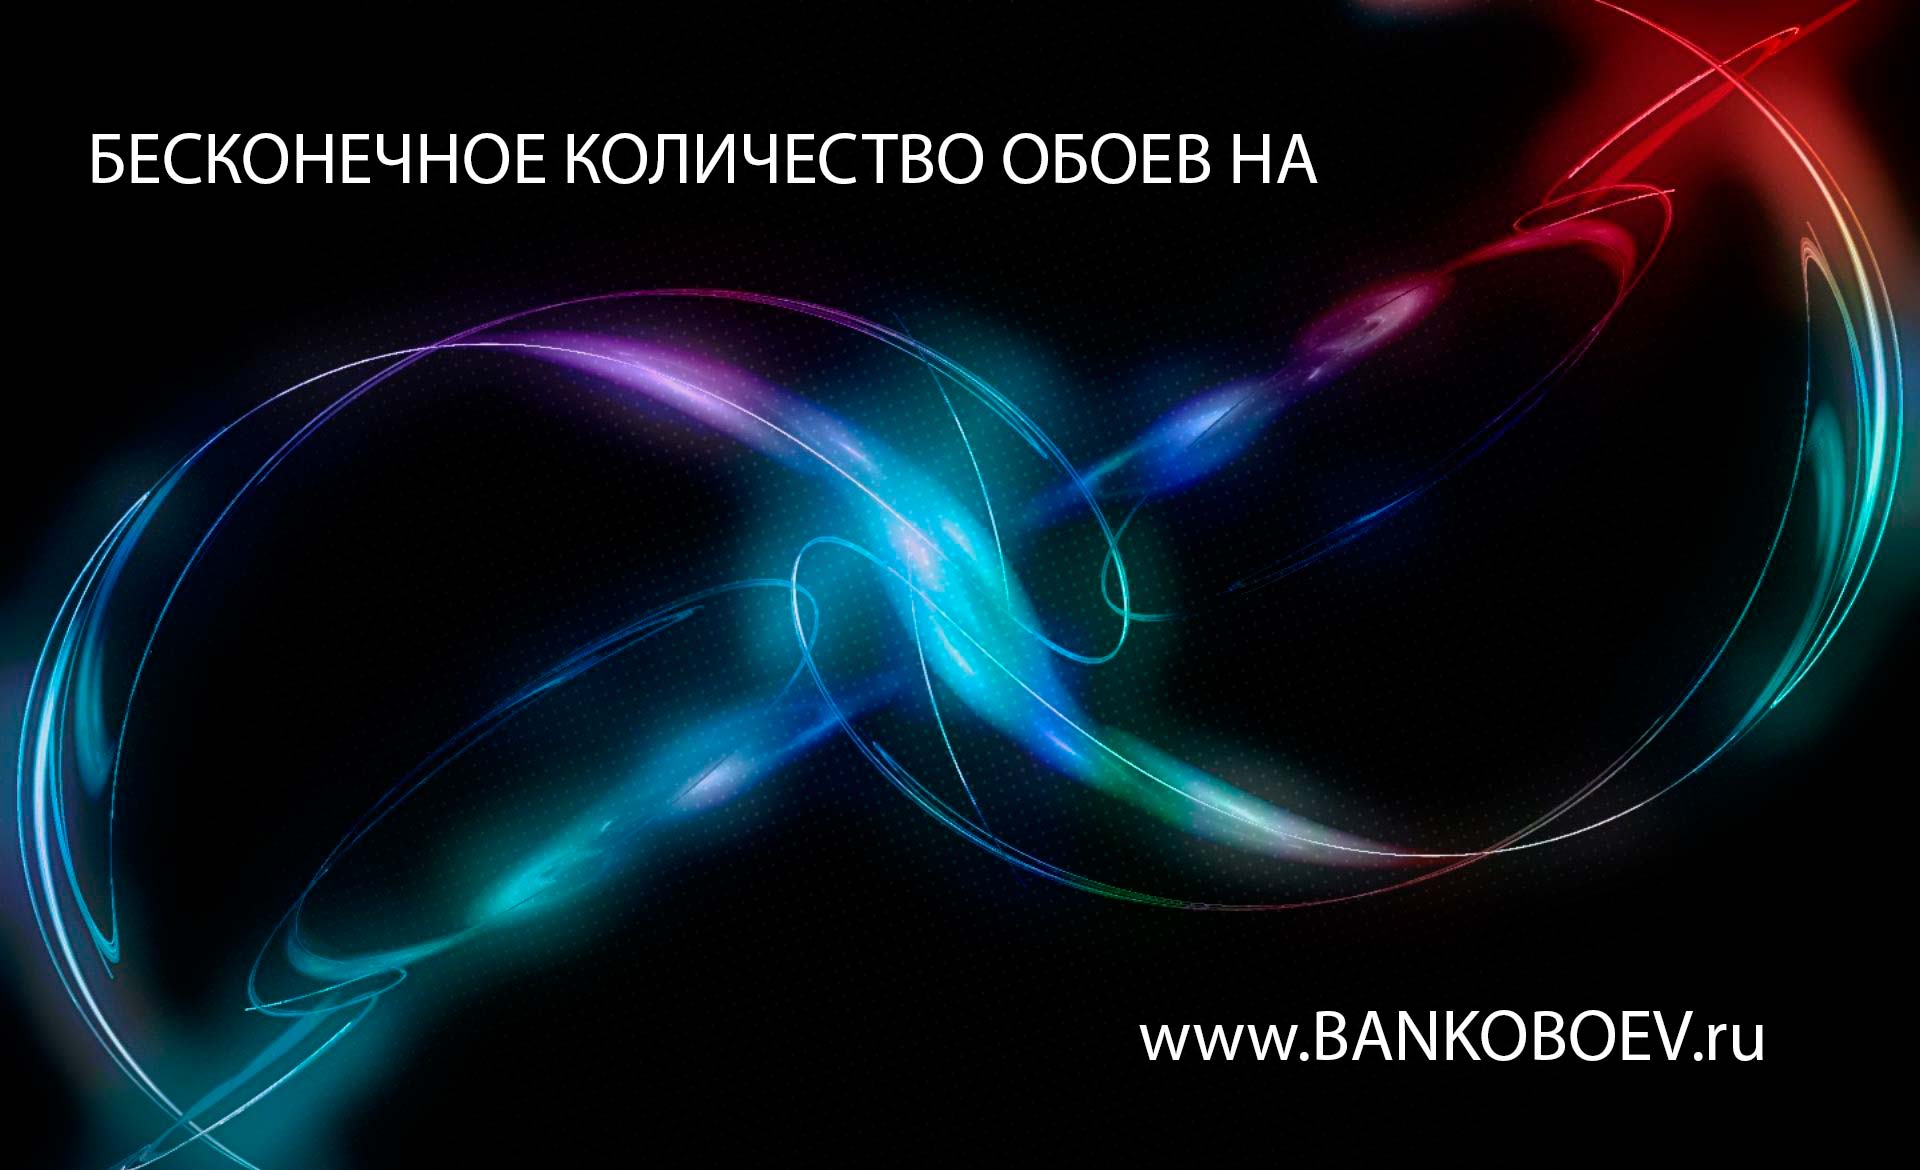 Source Bankoboev Ru Image Ota4ota